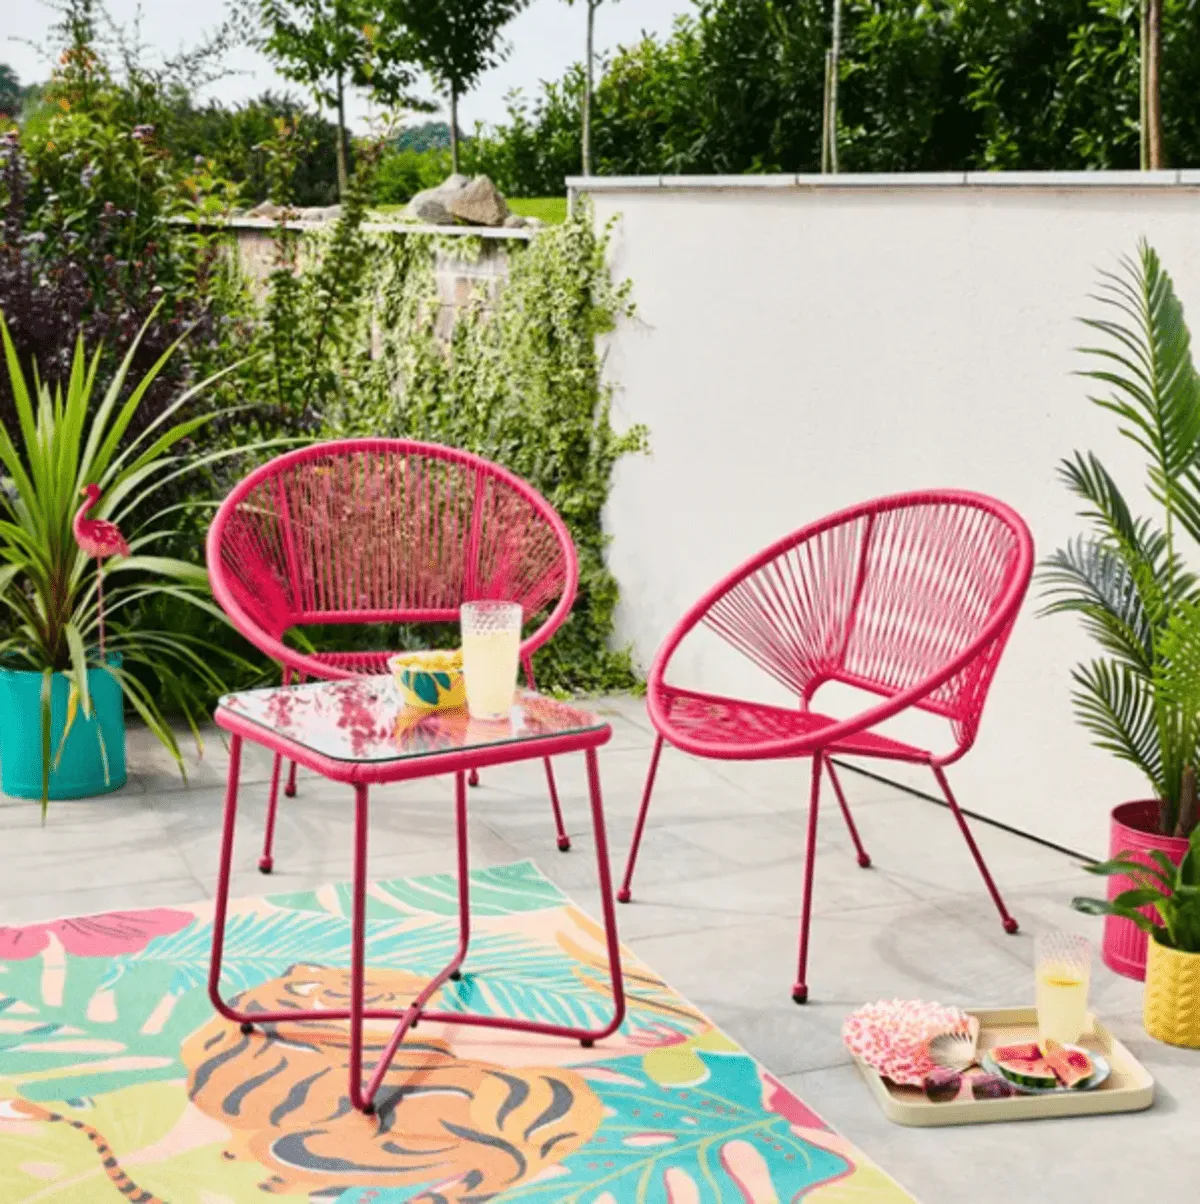 18 patio furniture ideas to get your garden summer ready